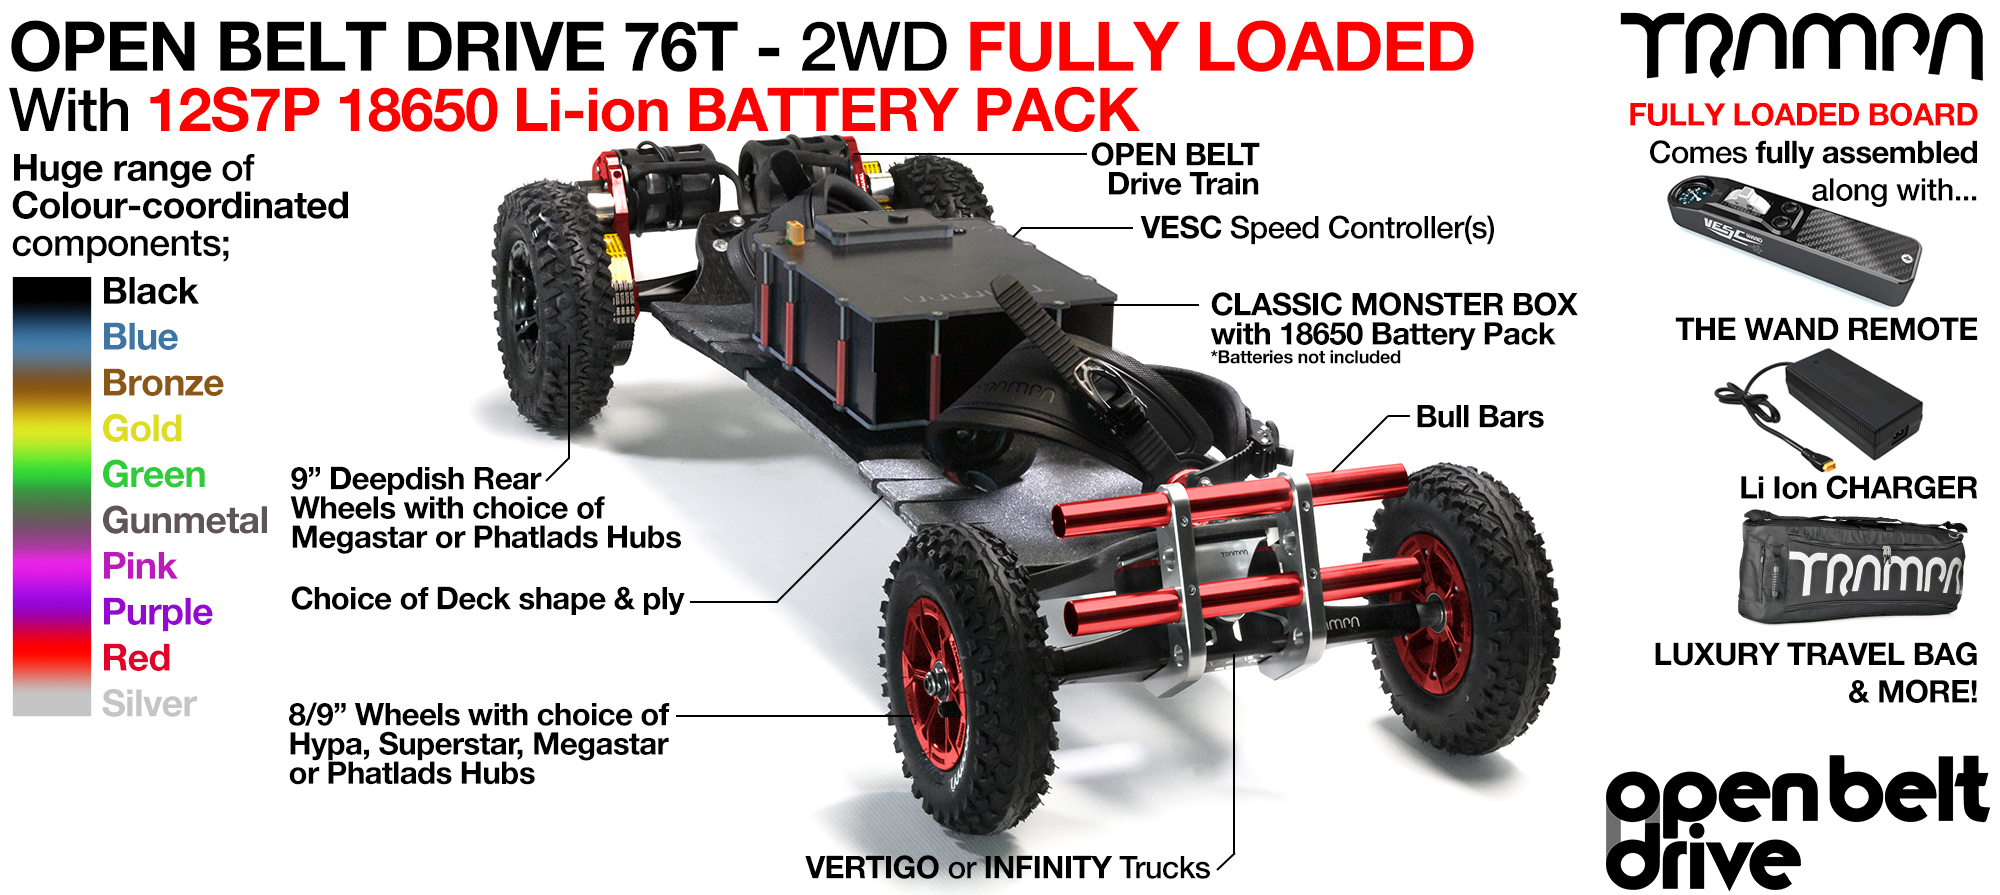 Powder Coated Red Hardened Steel Adjustable Frame 13 in All-Terrain Trike Combo